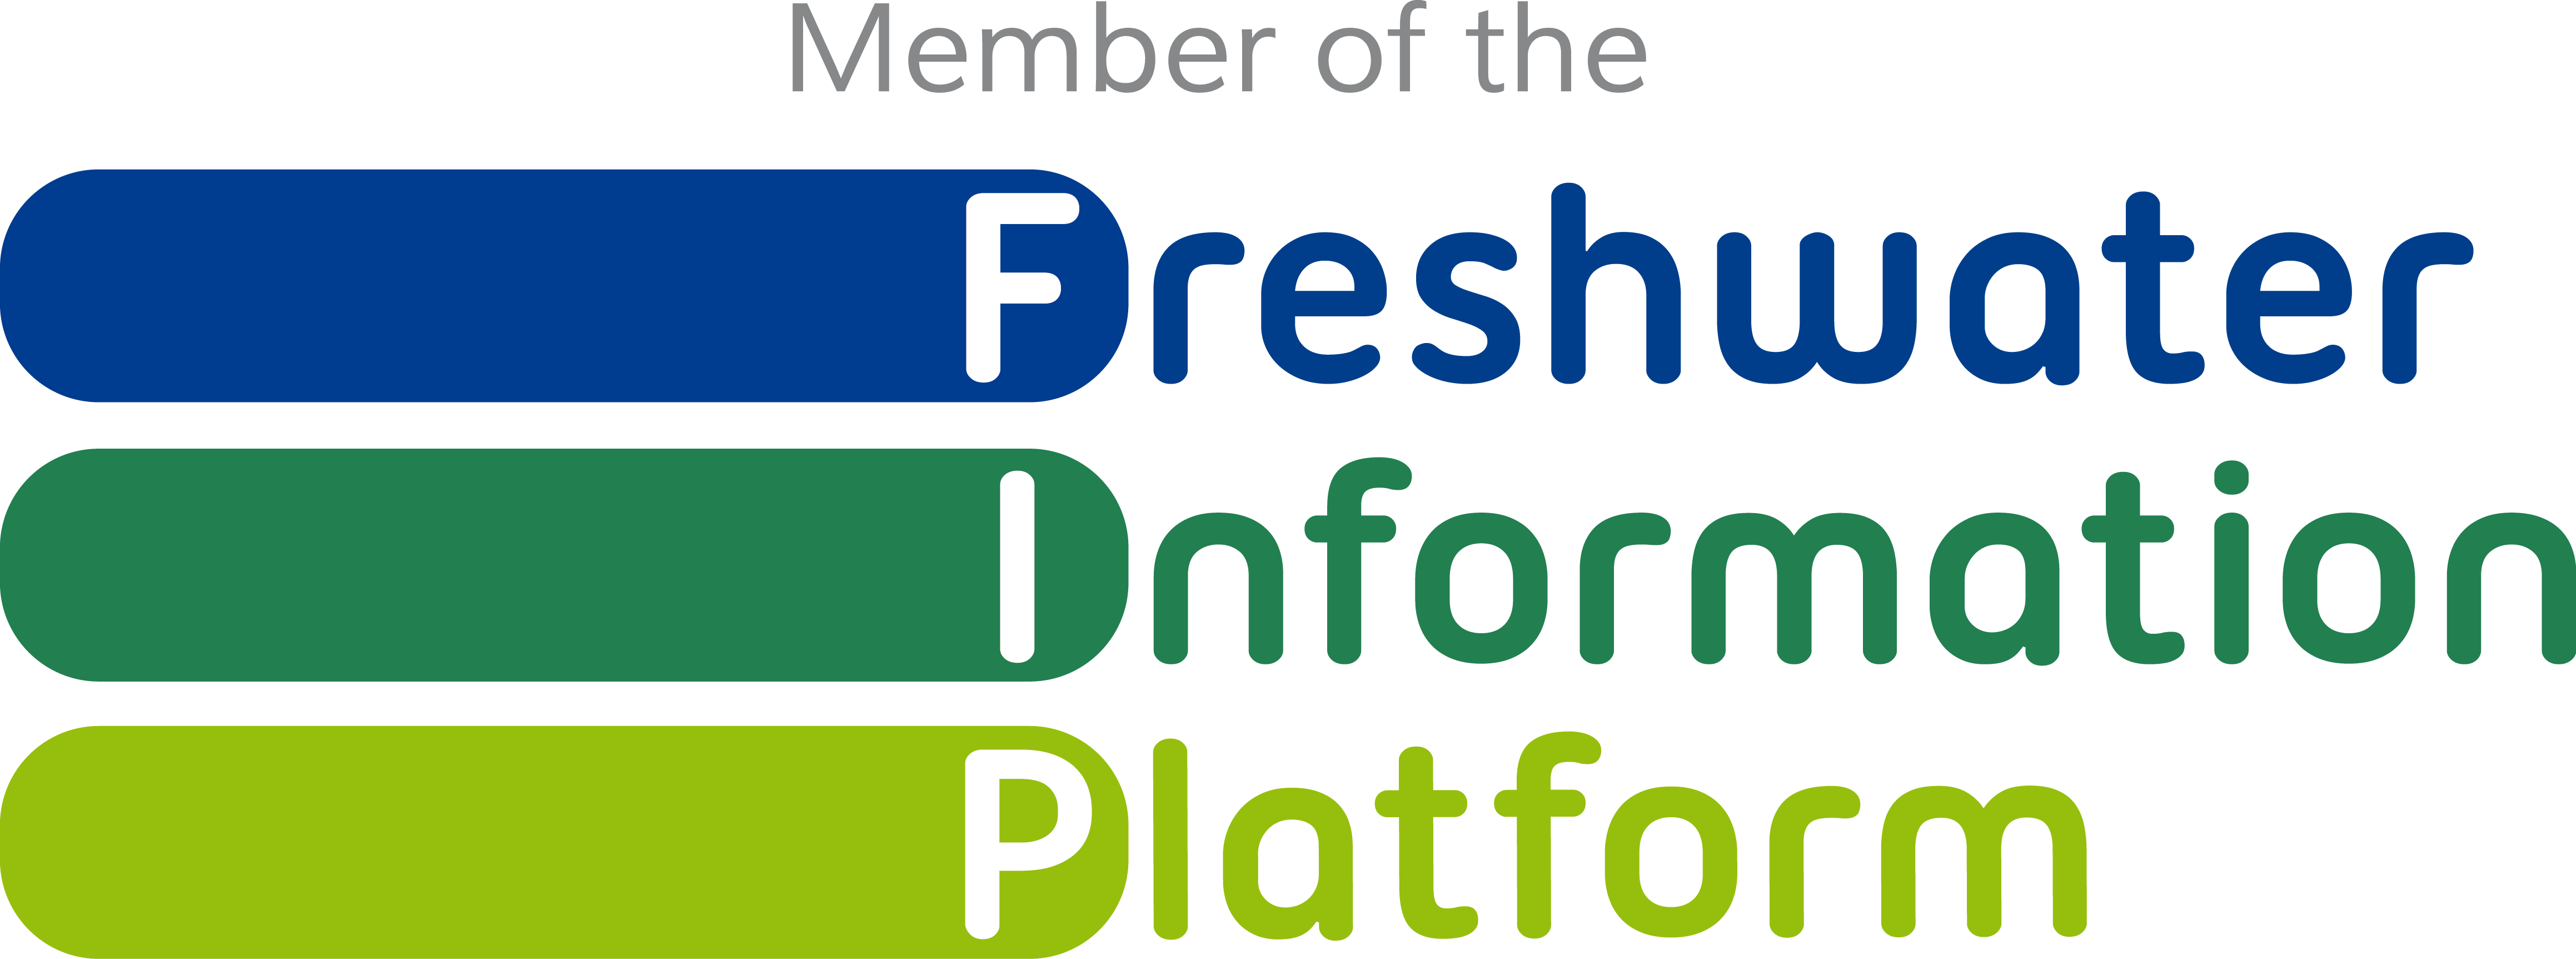 Freshwater Information Platform